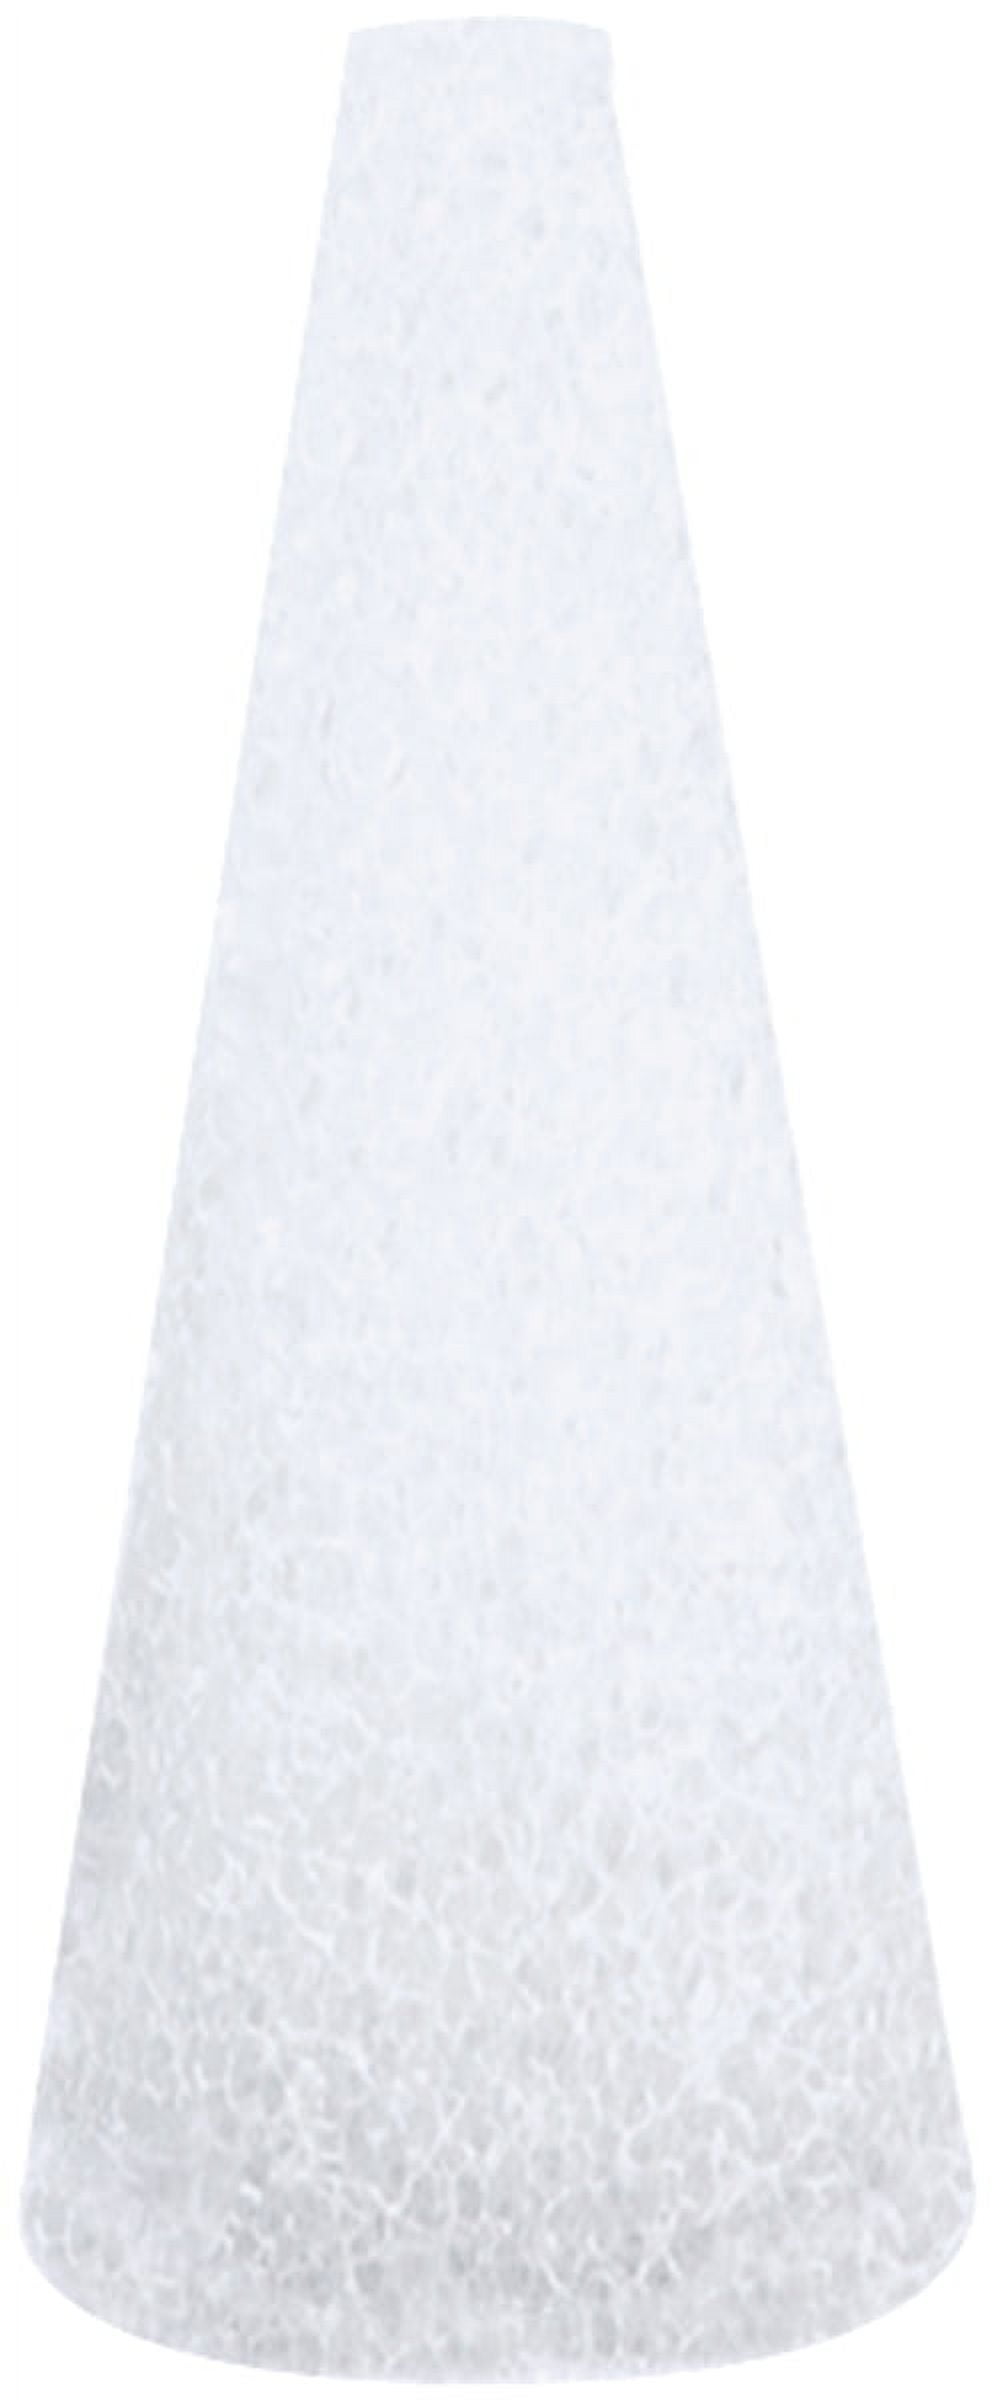 UPC 046501121707 - floraCraft Foam Cone 3.9 inch x 11.8 inch White